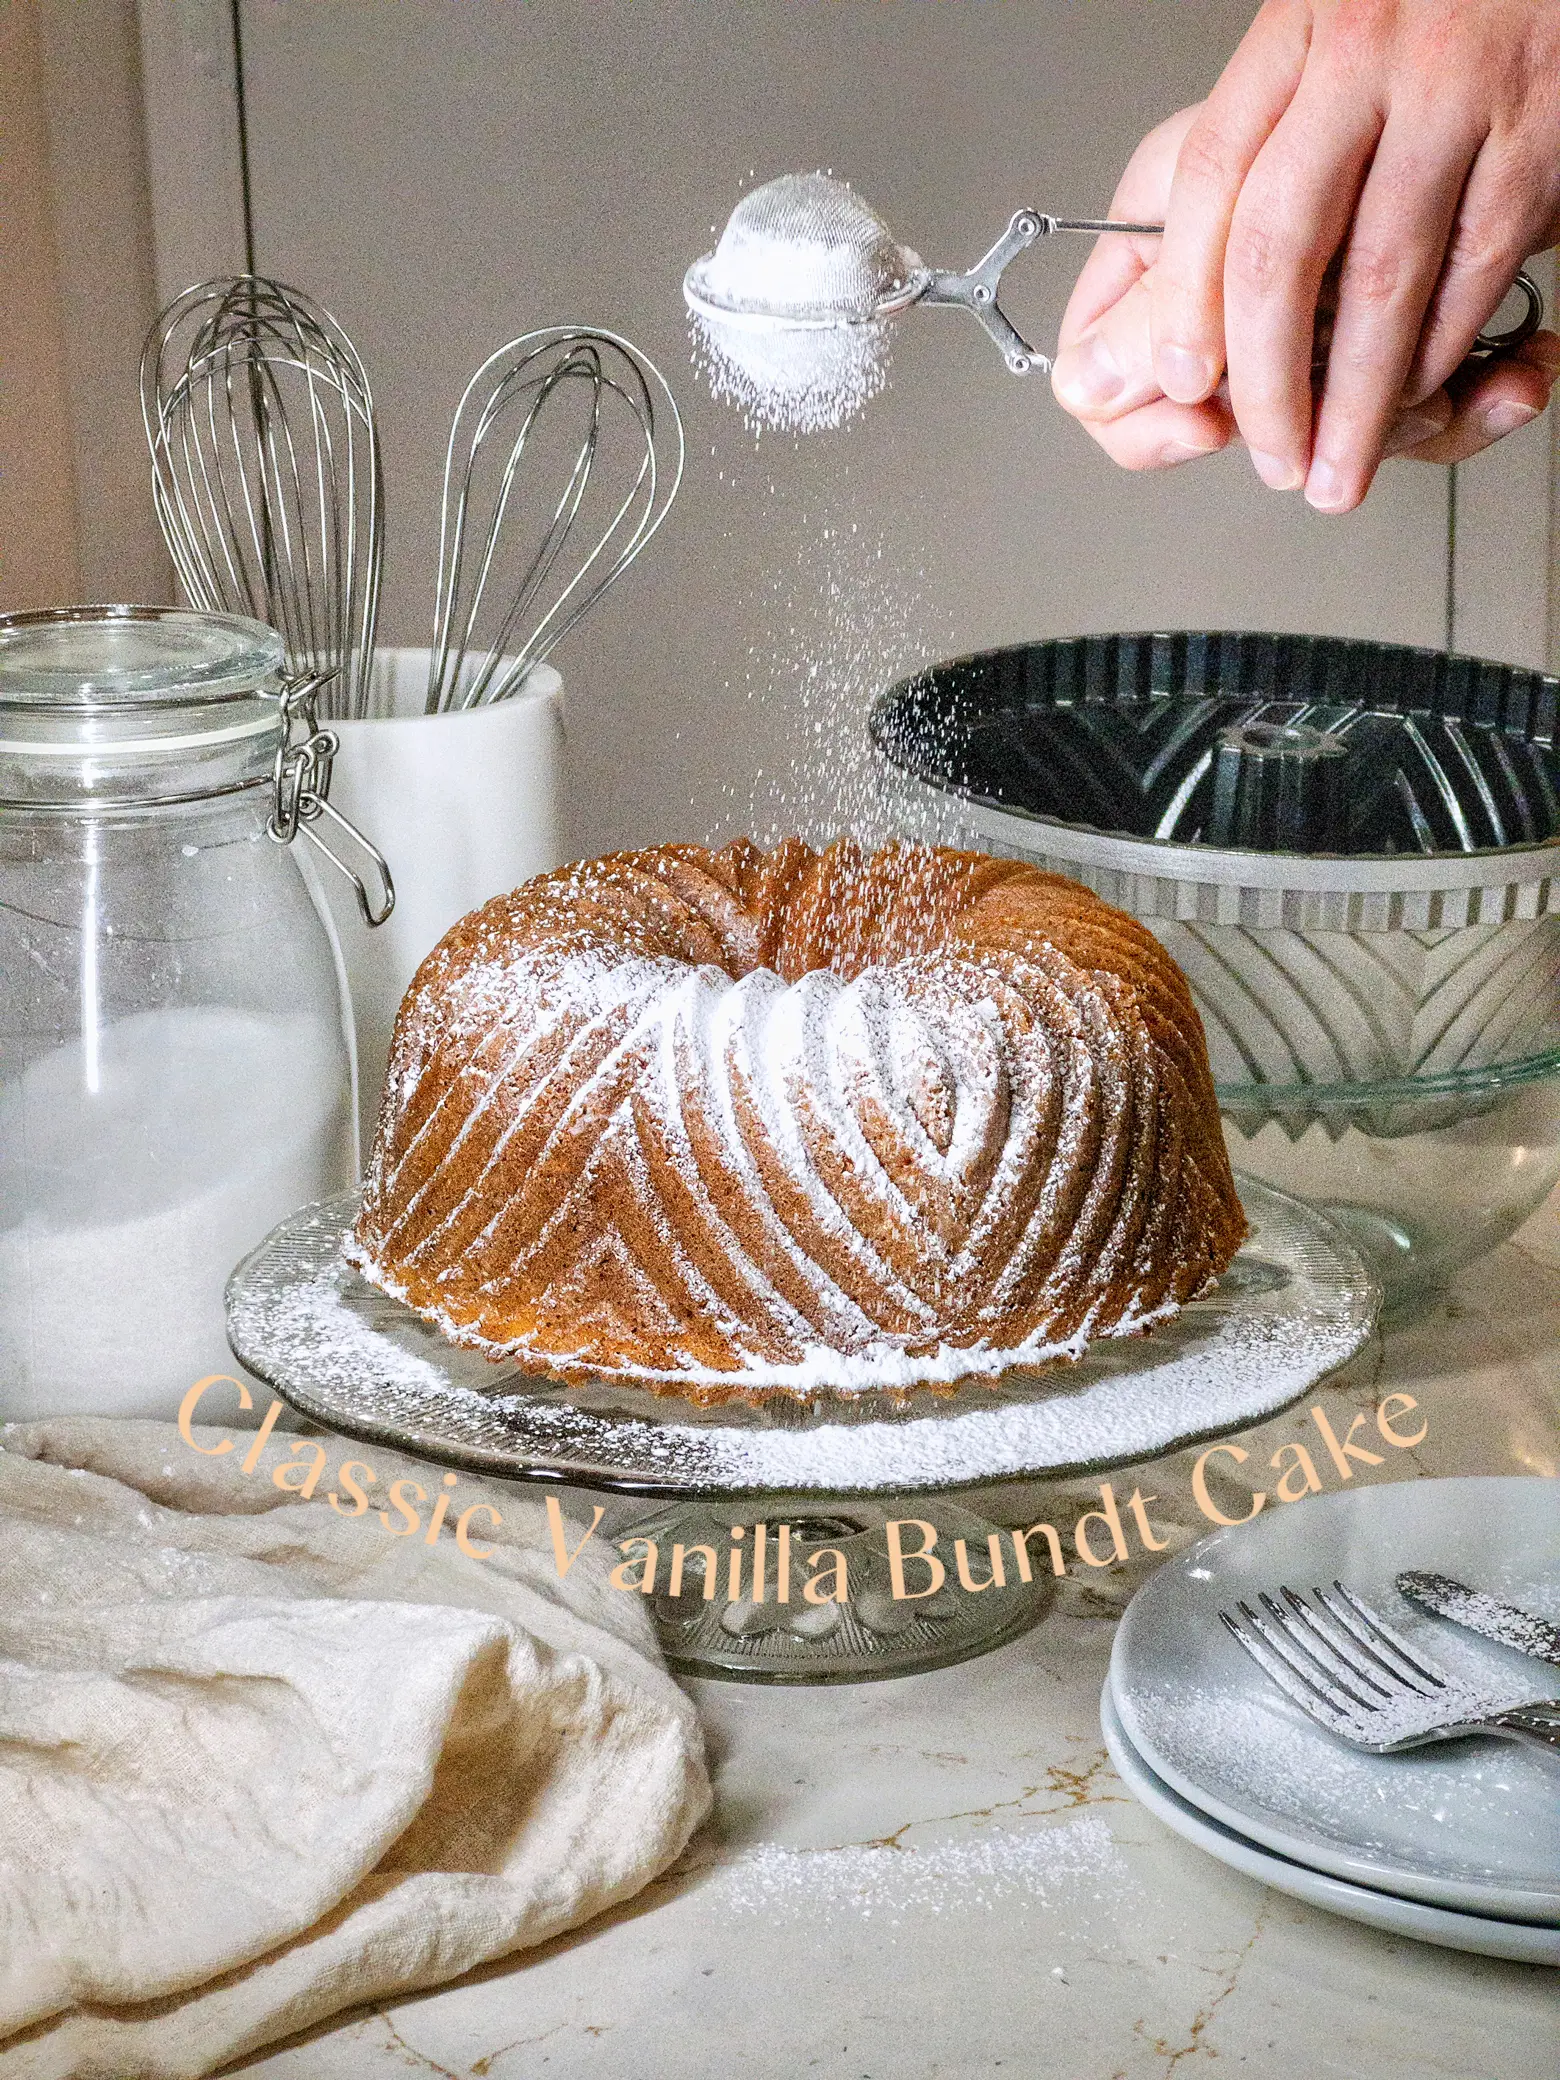 Classic Vanilla Bundt Cake Recipe